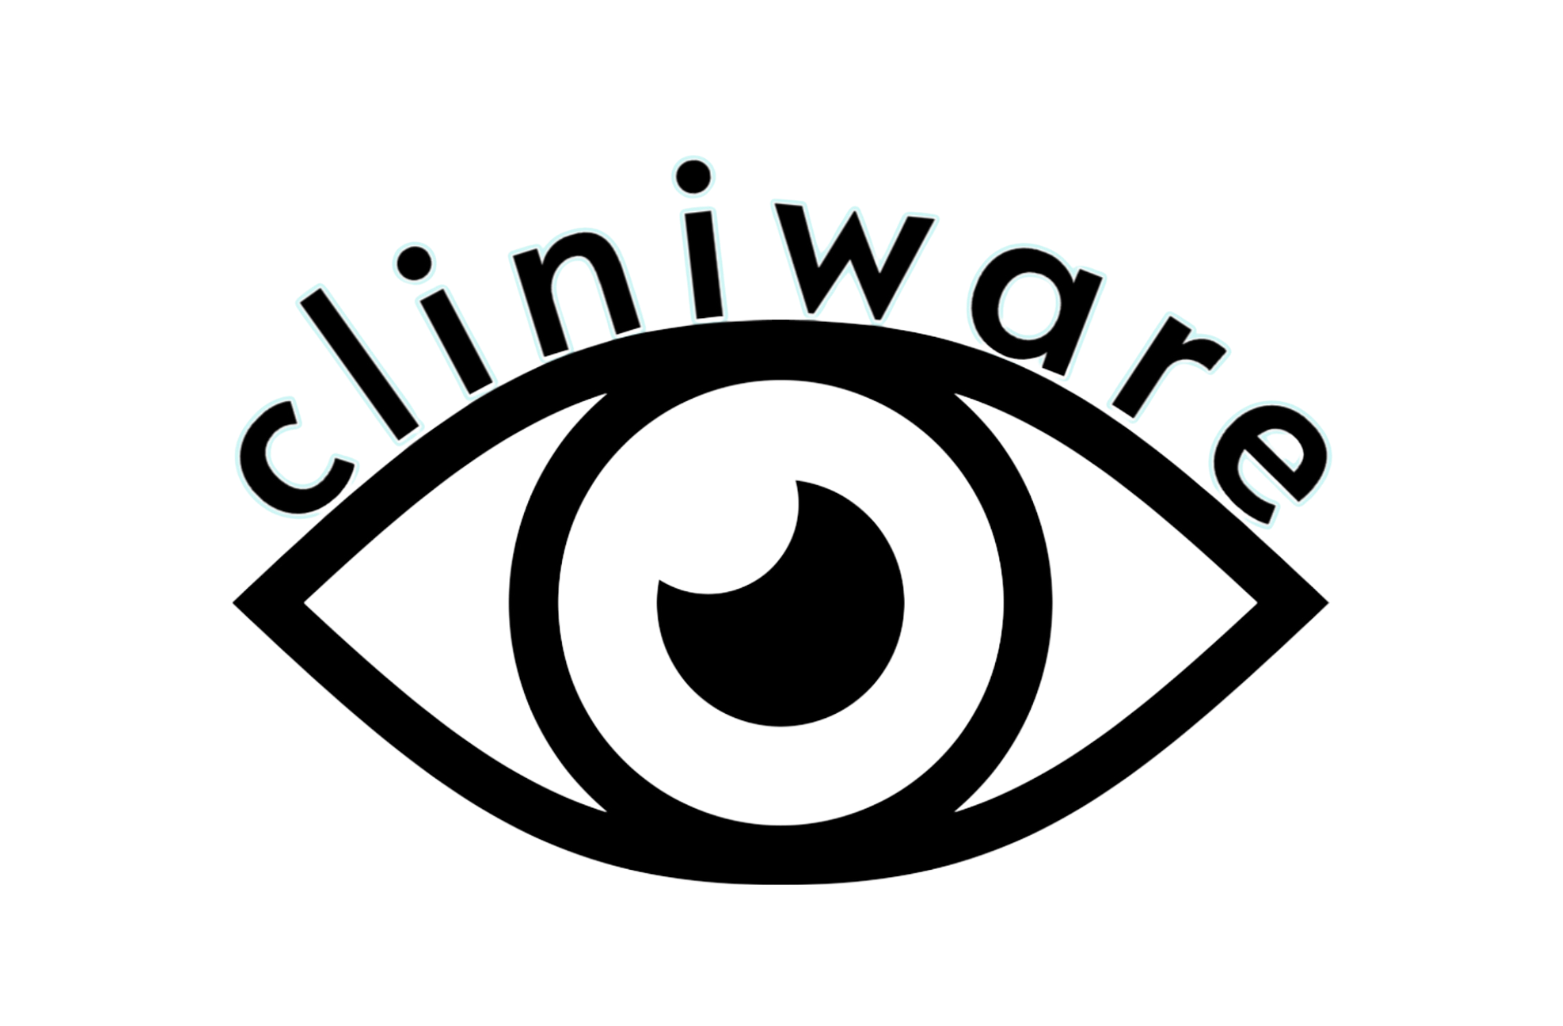 Cliniware Logo 